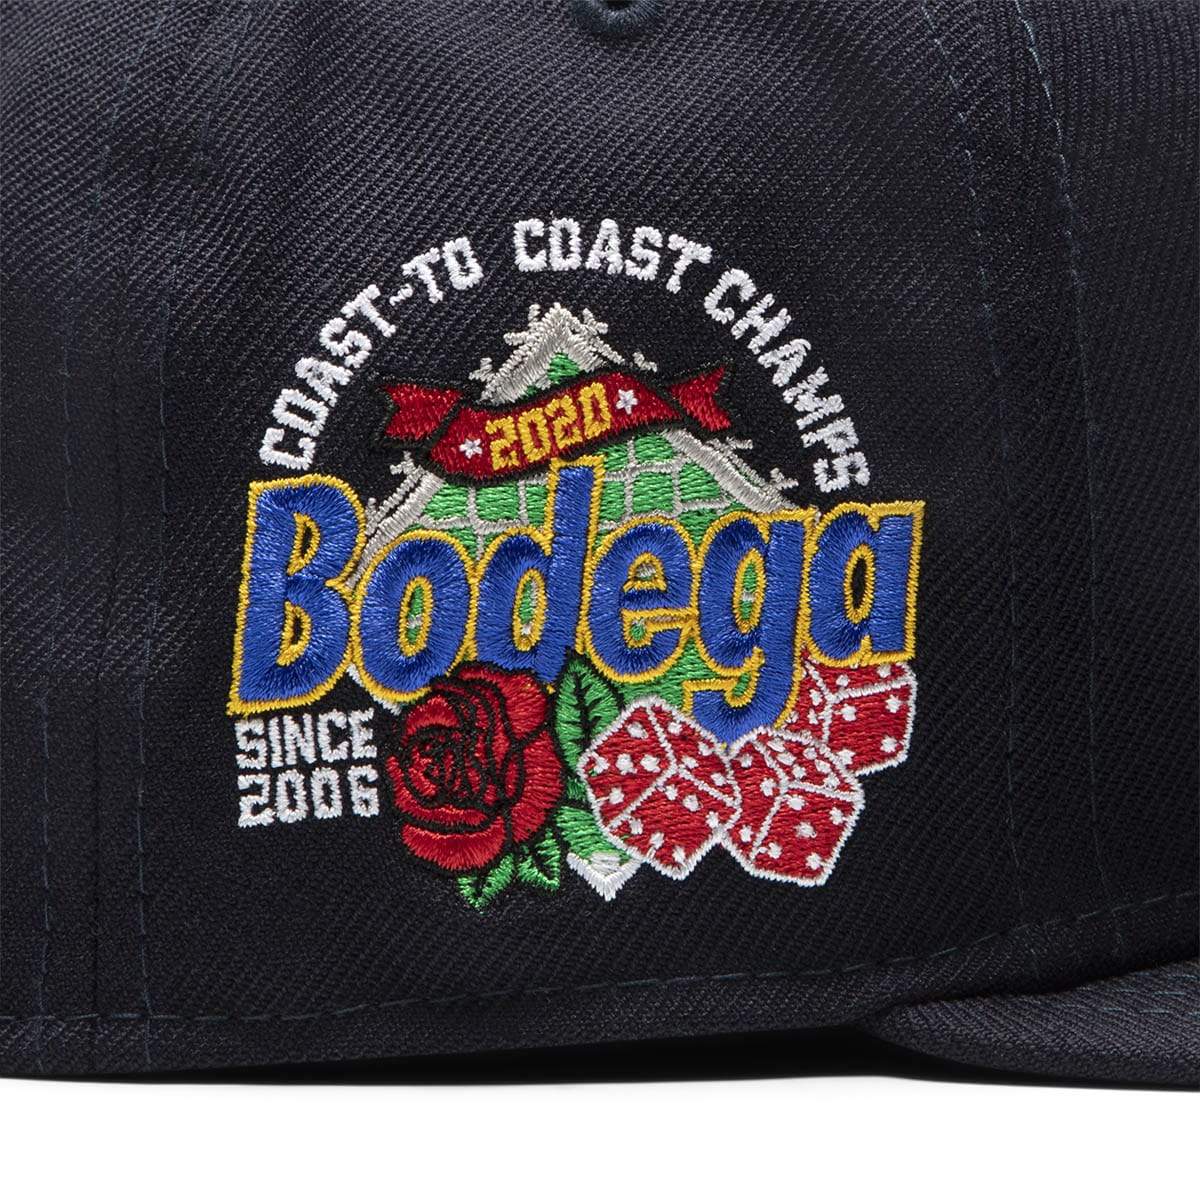 Bodega Headwear x New Era 59FIFTY BOSTON ON FIELD FITTED